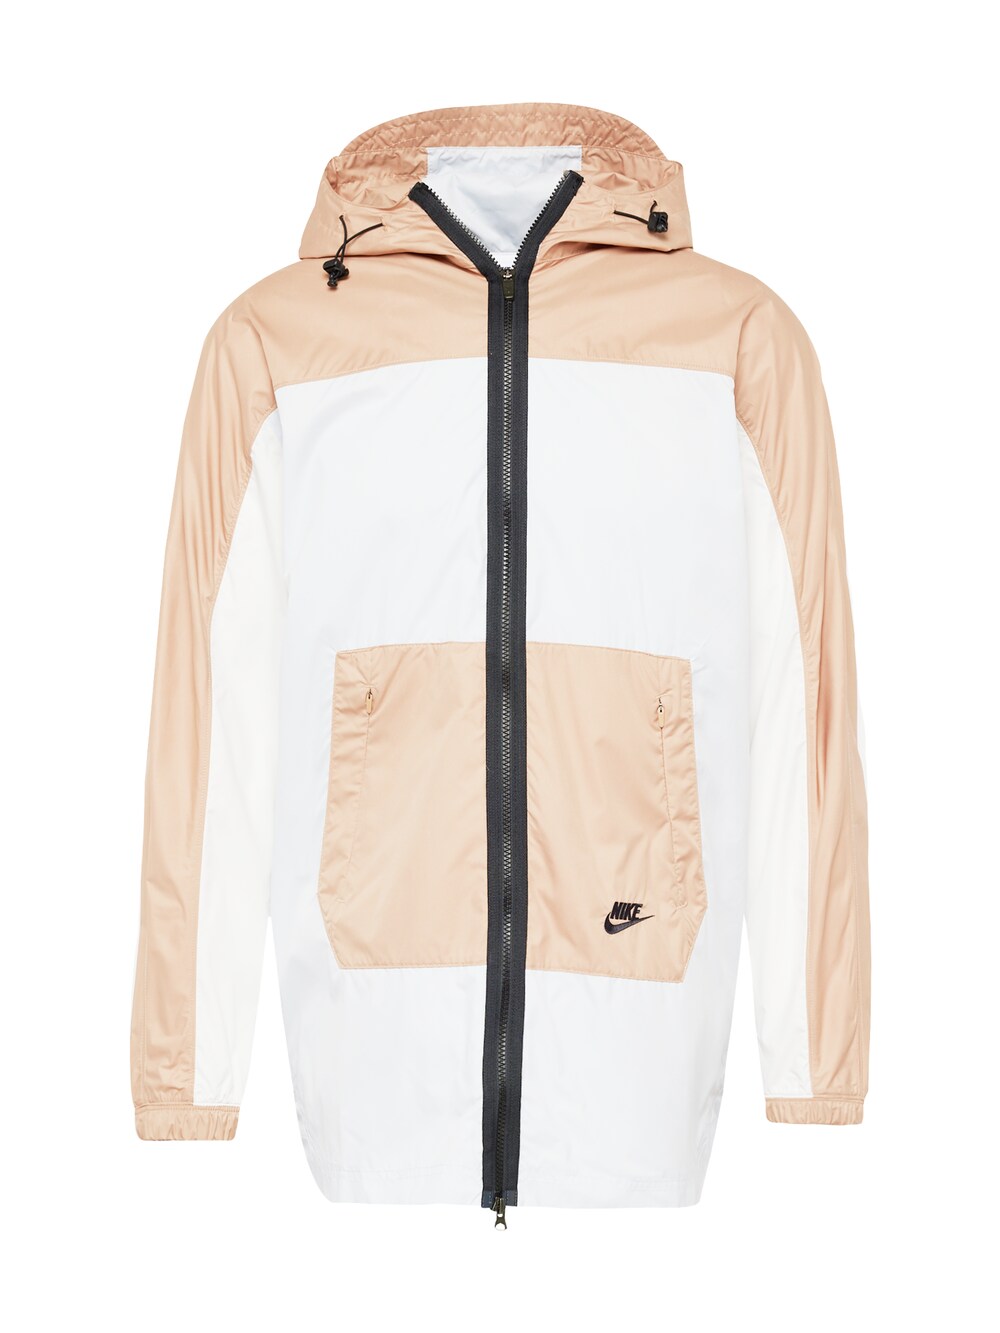 Межсезонная куртка Nike Sportswear, светло-коричневый куртка утепленная nike sportswear trend светло коричневый